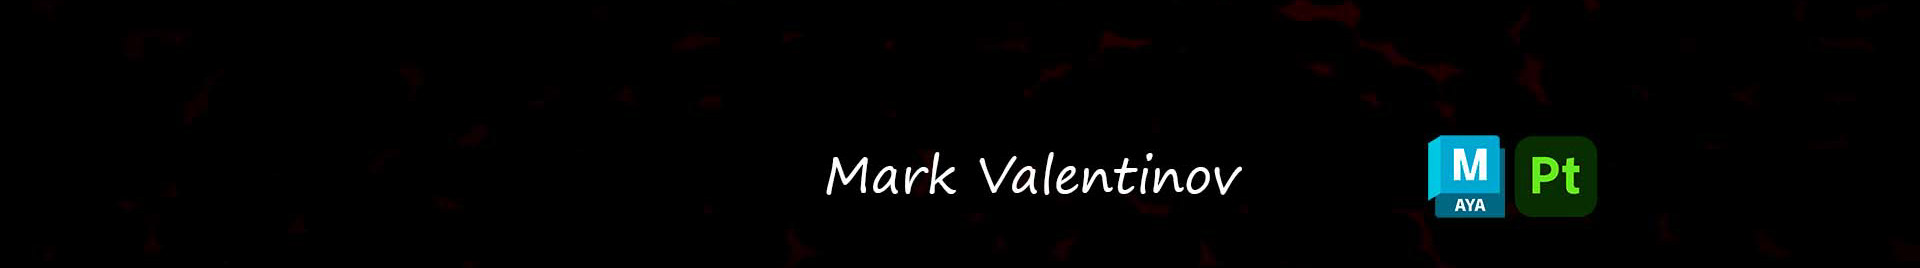 Mark Valentinov's profile banner